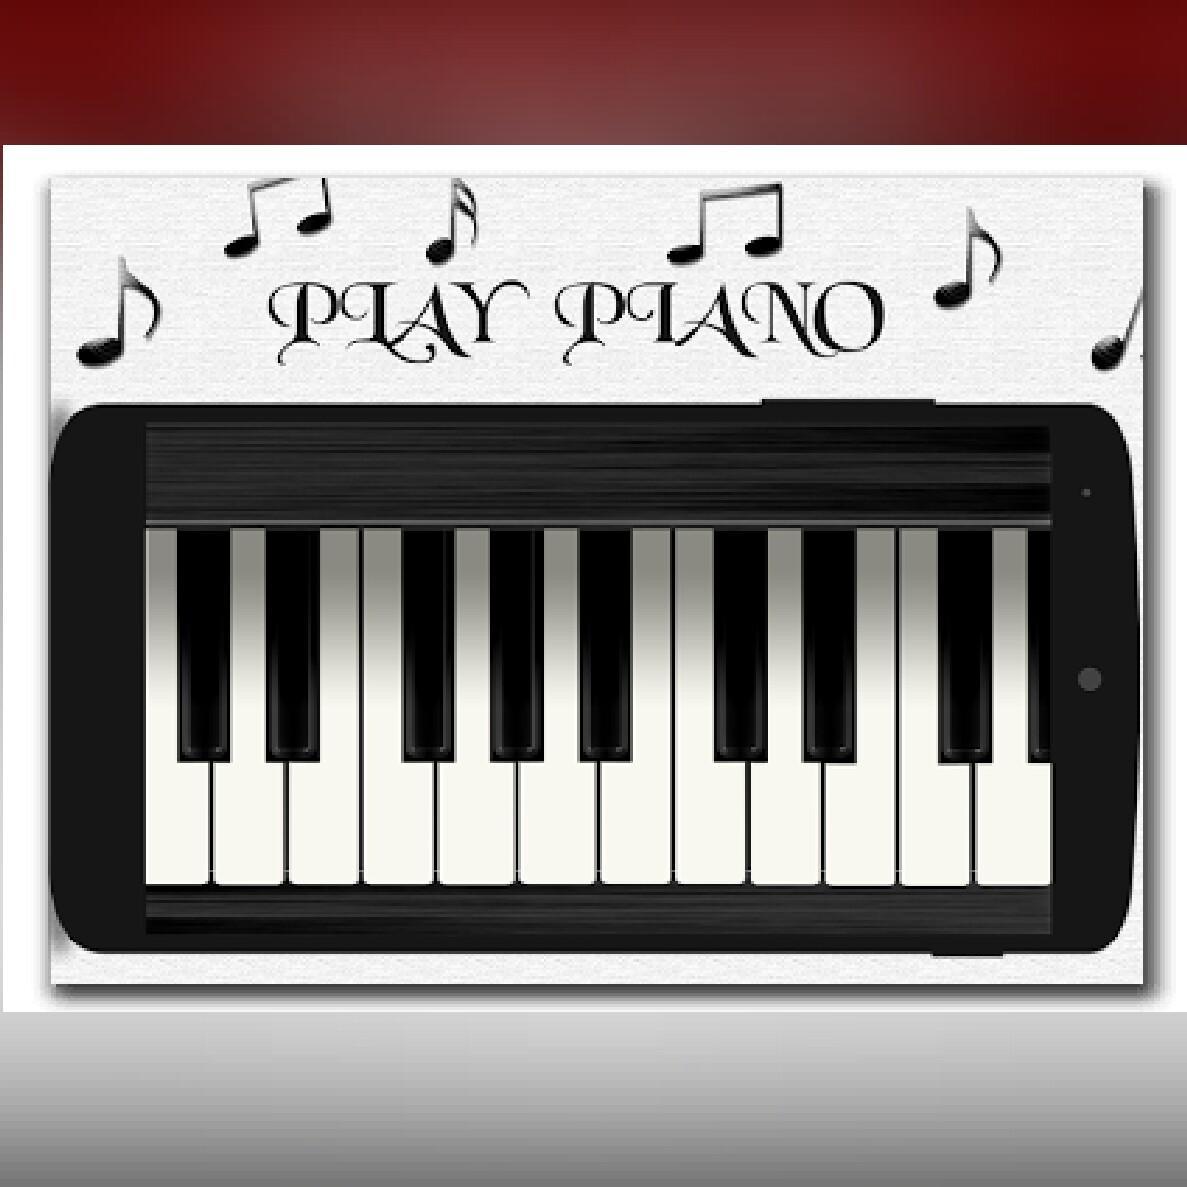 He can play piano. Emin Play Piano. Playable Piano rdt2. We Play рояль. Play Piano маленькая картинка.